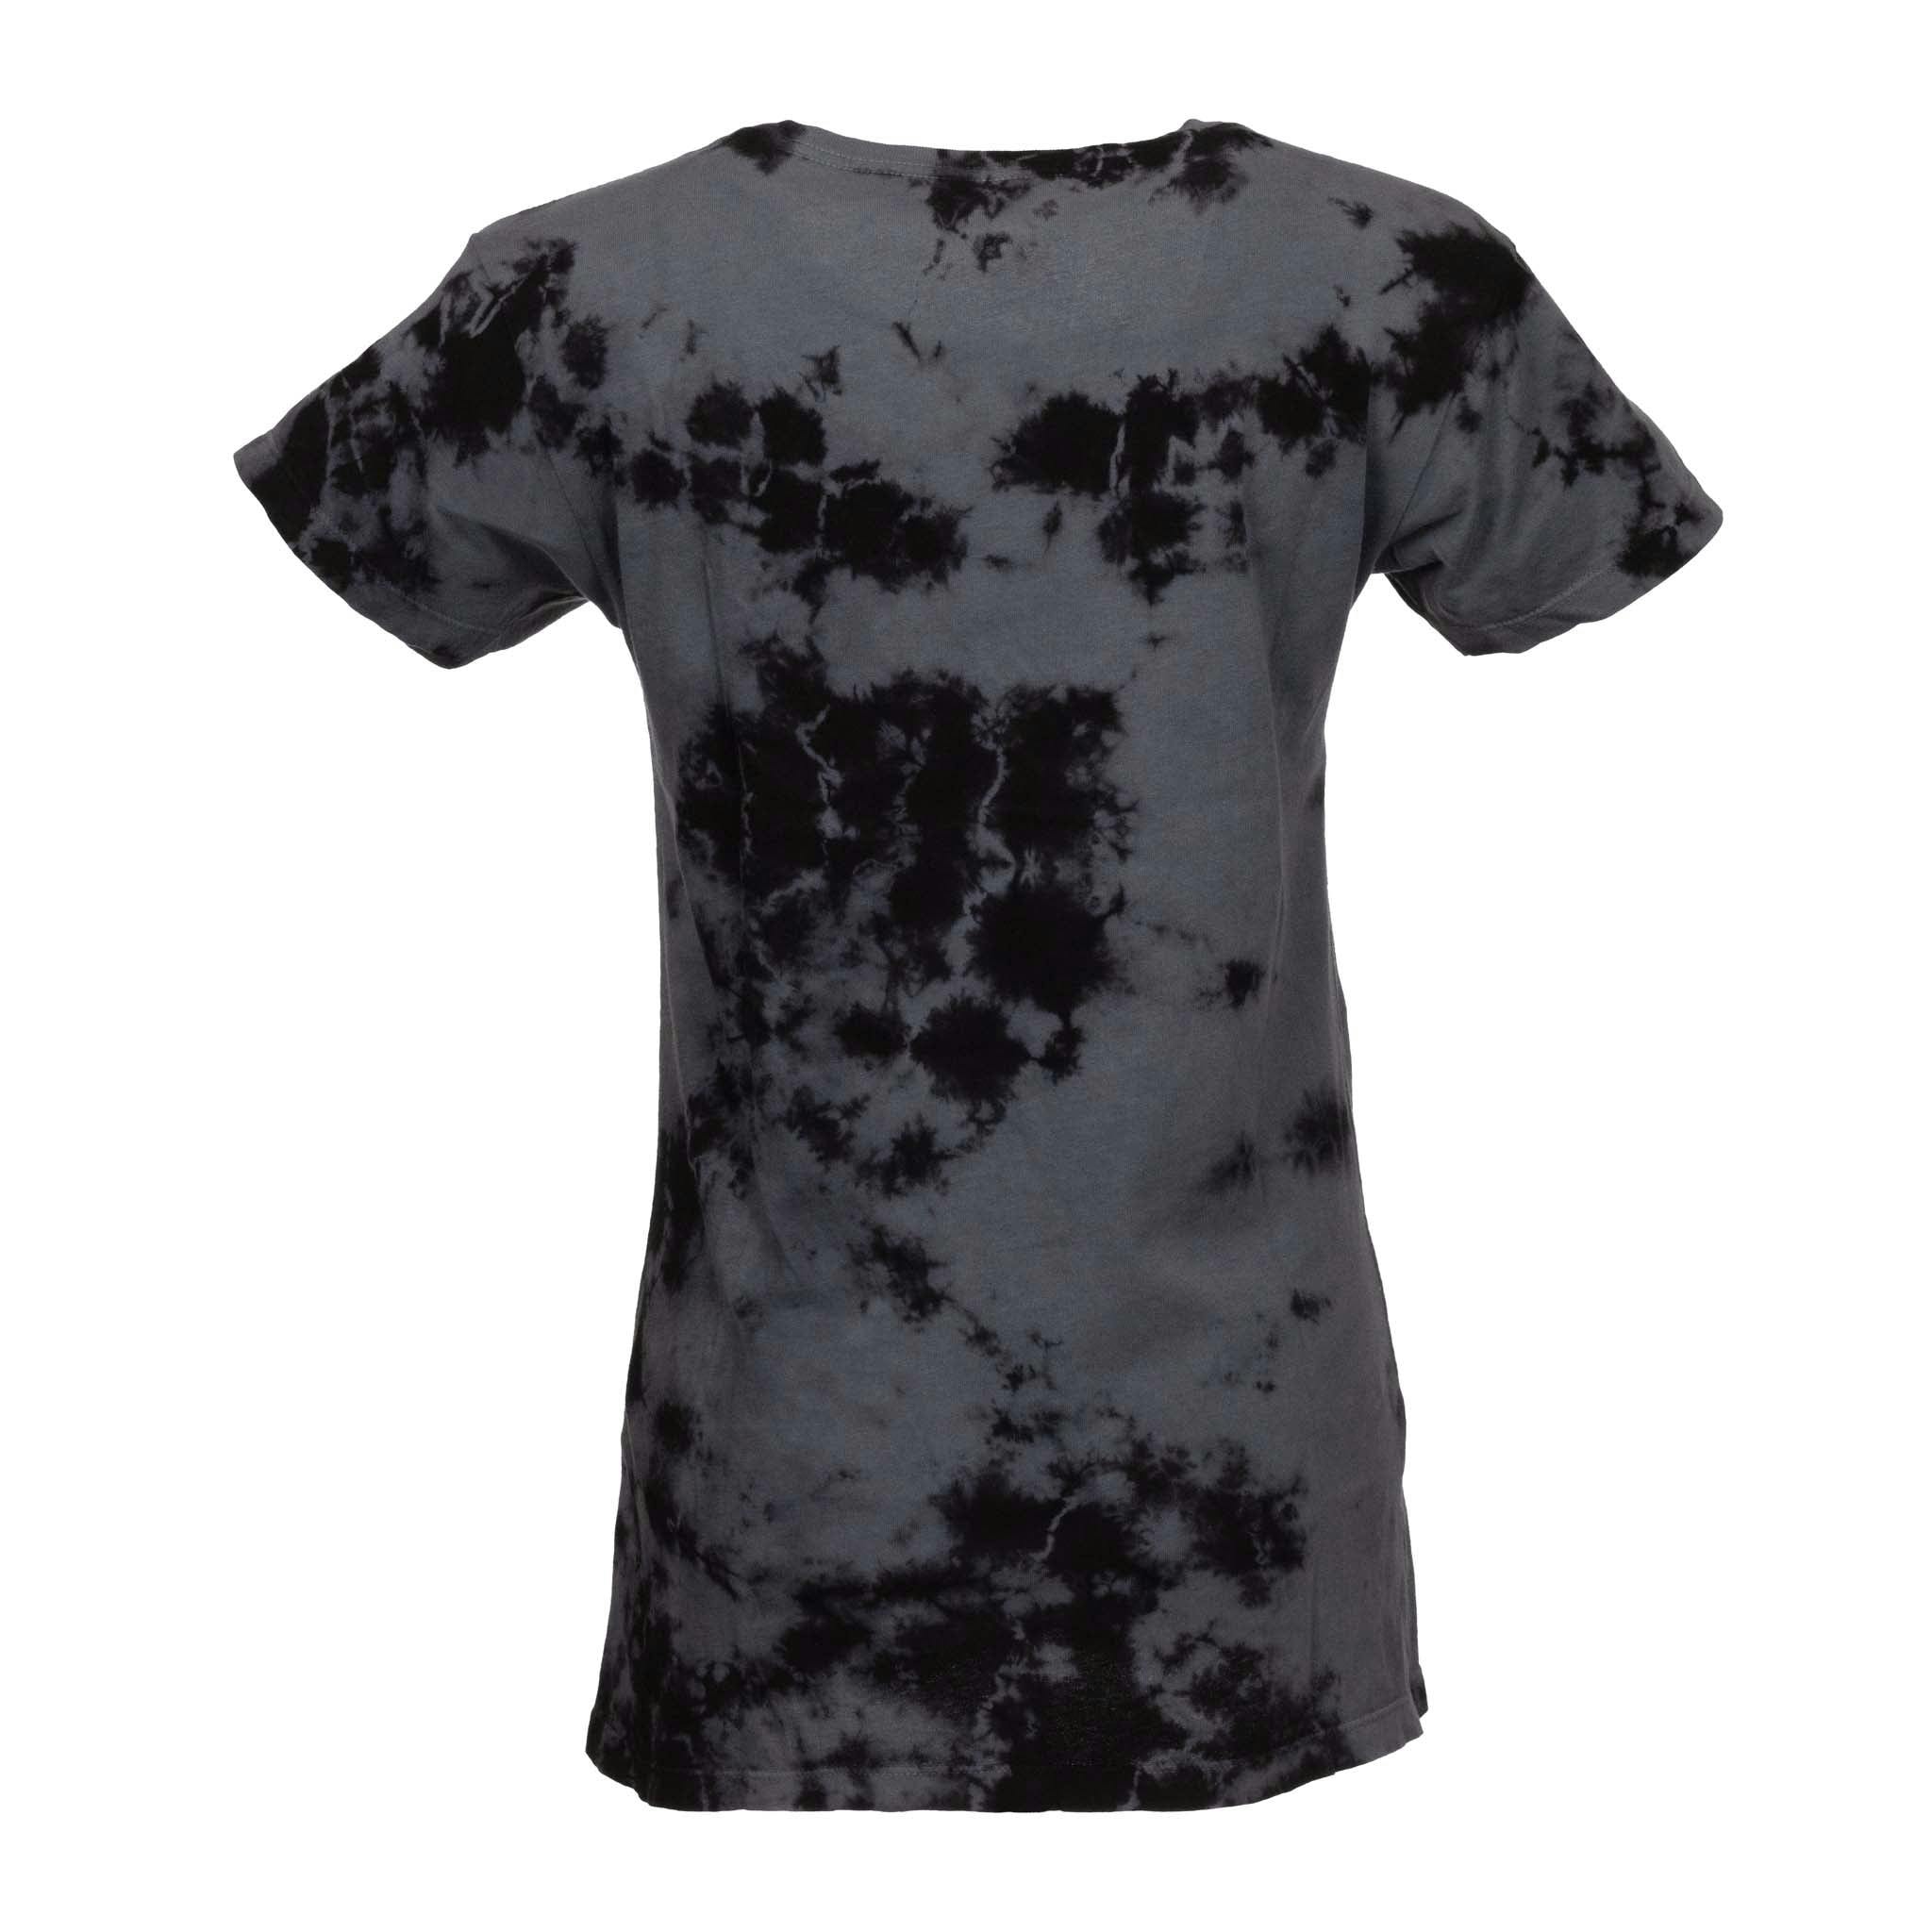 Sierra Nevada Women's Acid Washed Retro Shirt Black - Back view